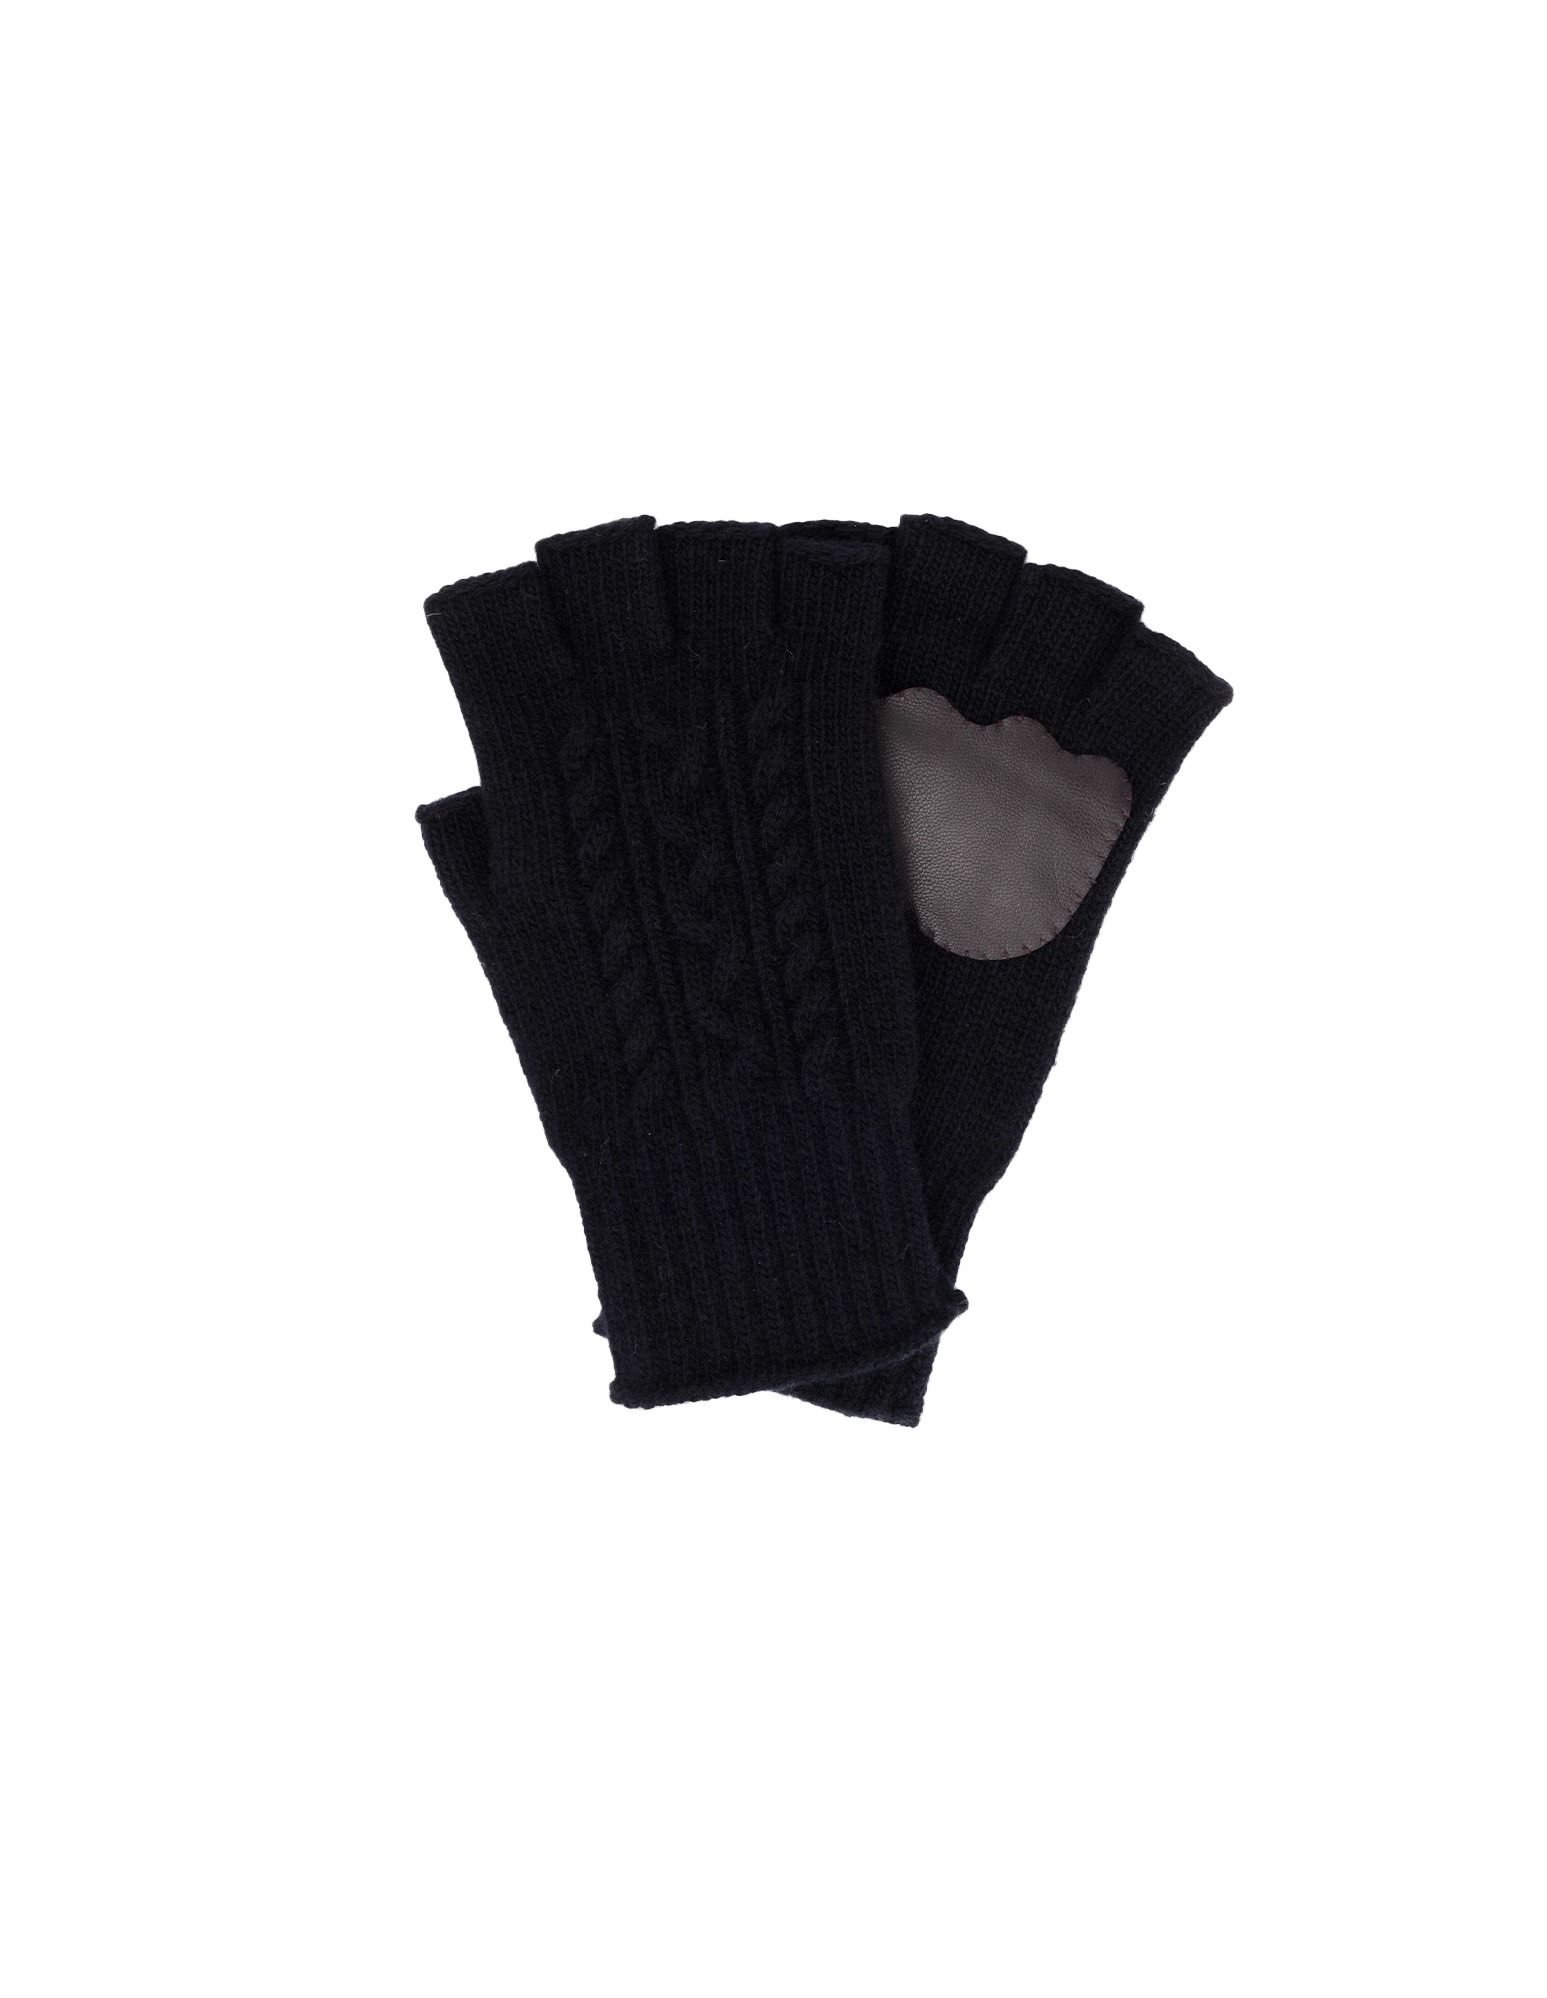 Survival Glove (Black)